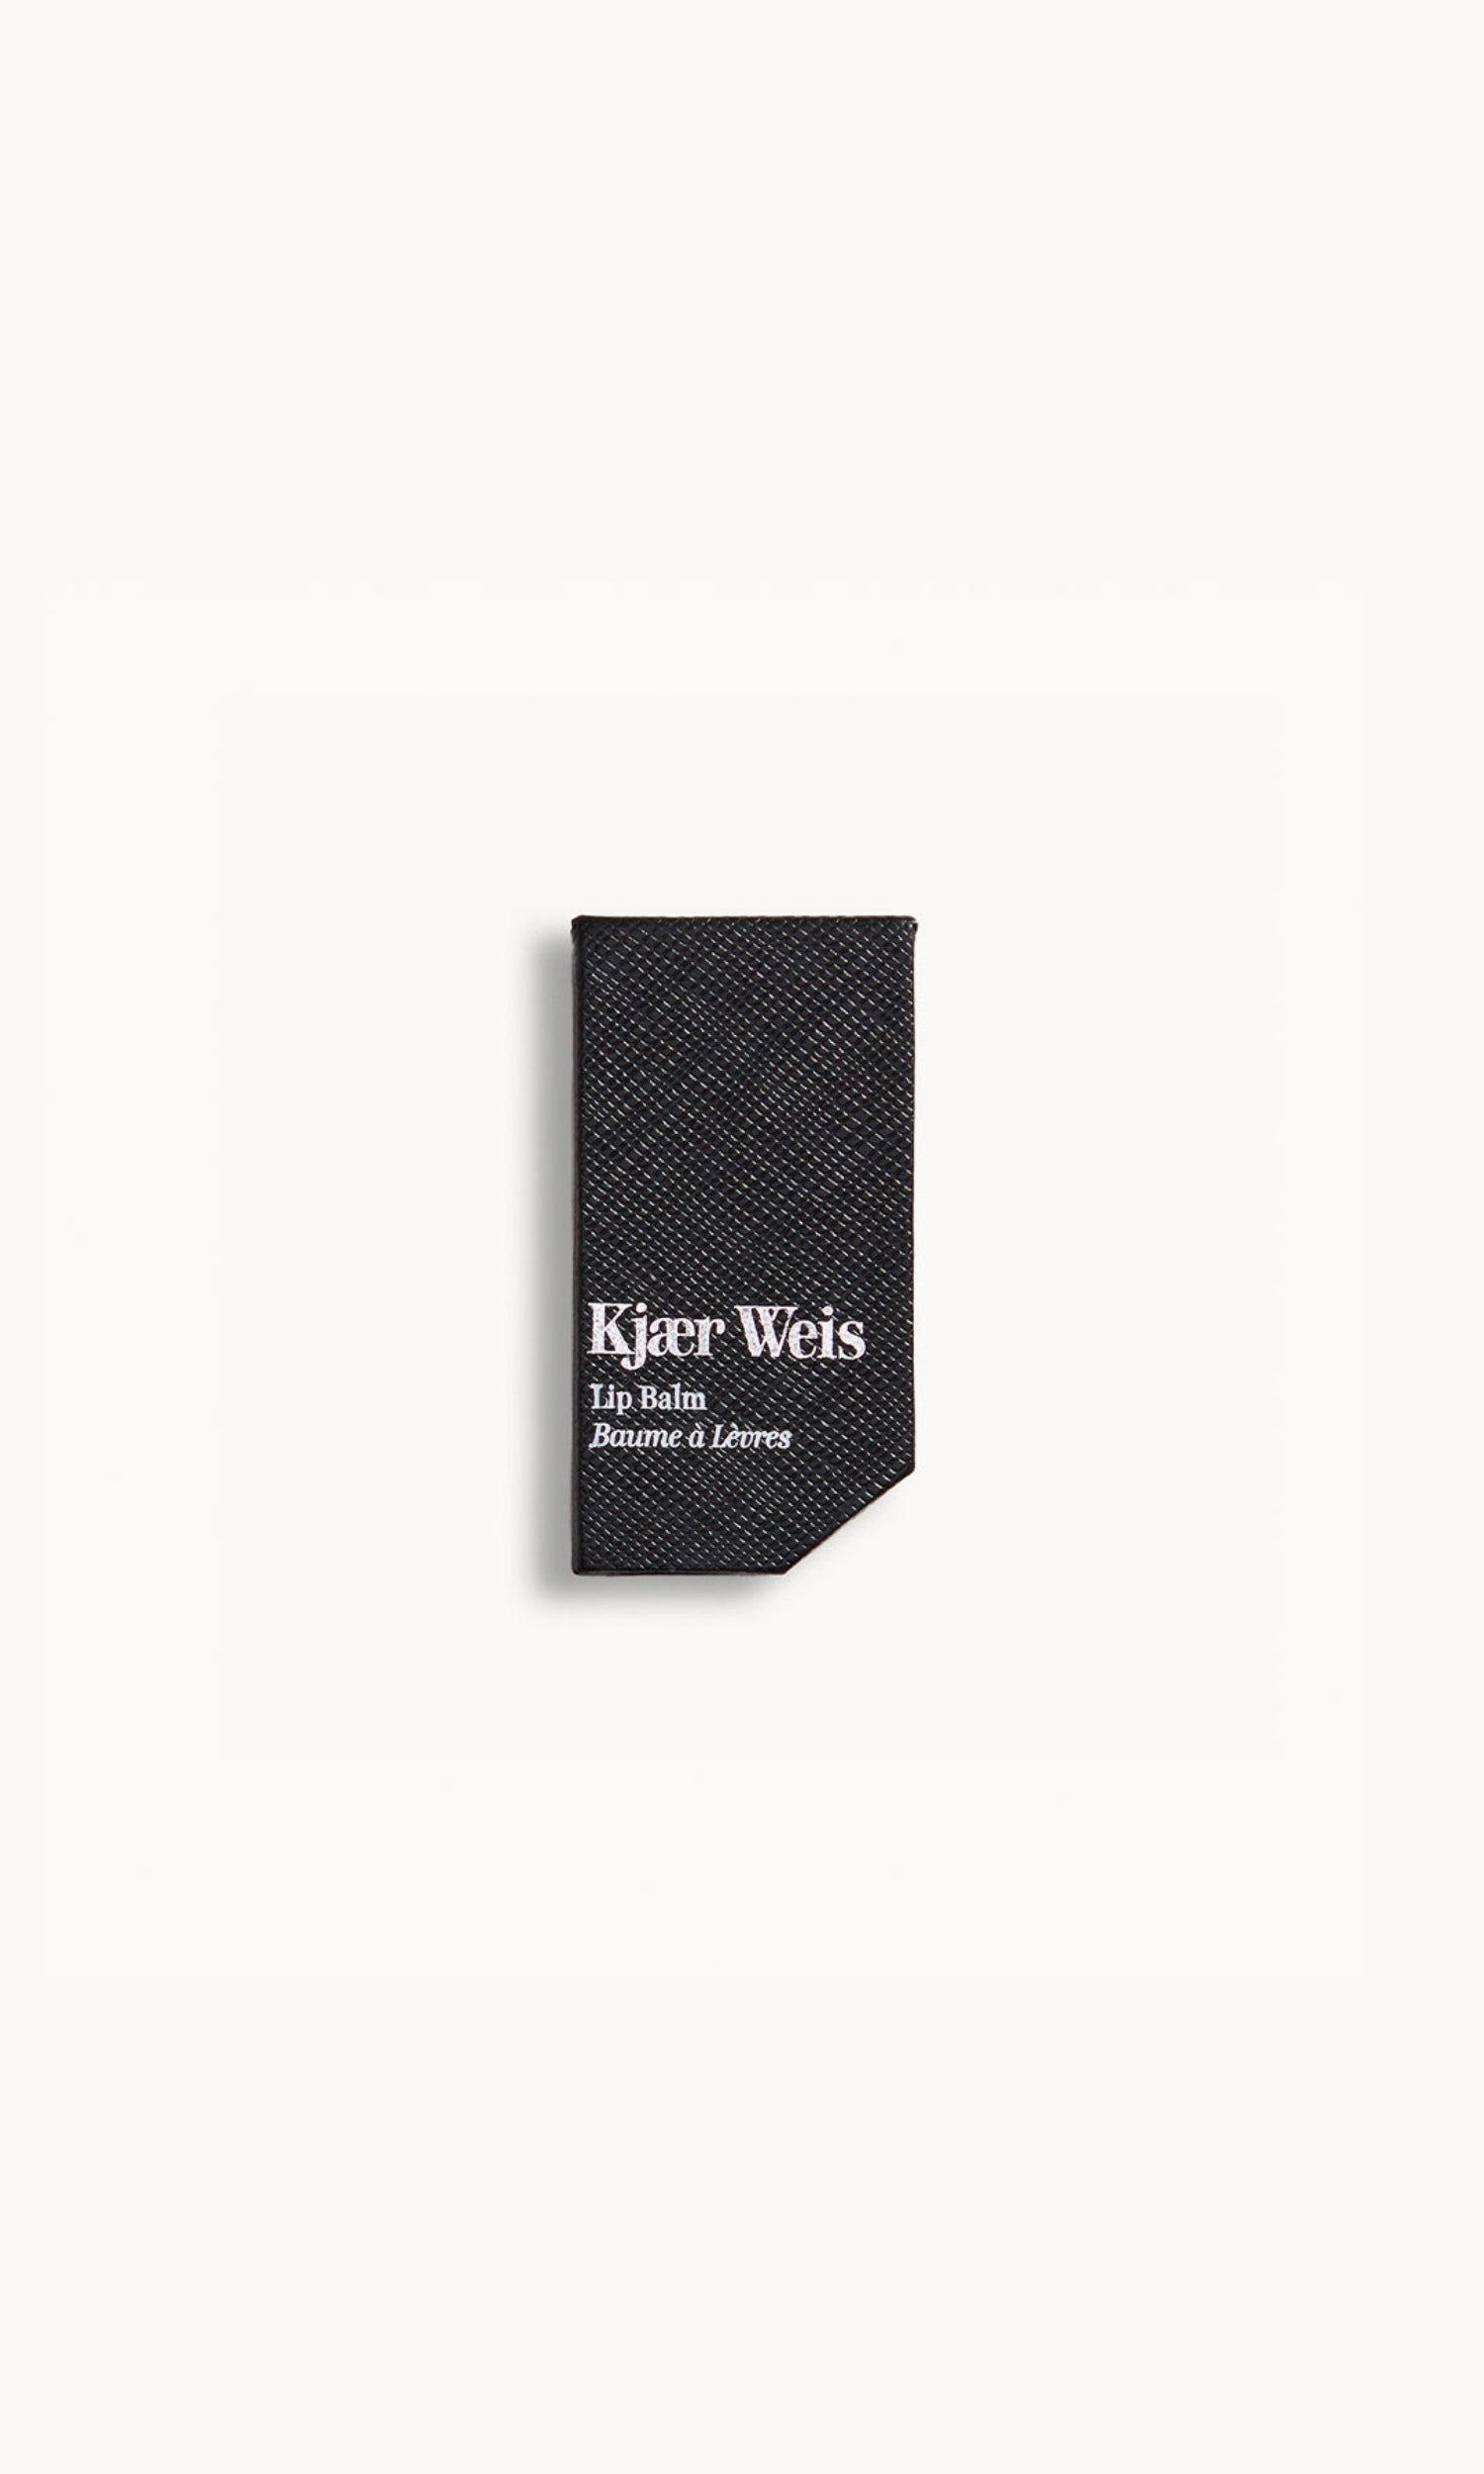 Kjaer Weis lip balm packaging in black textured paper